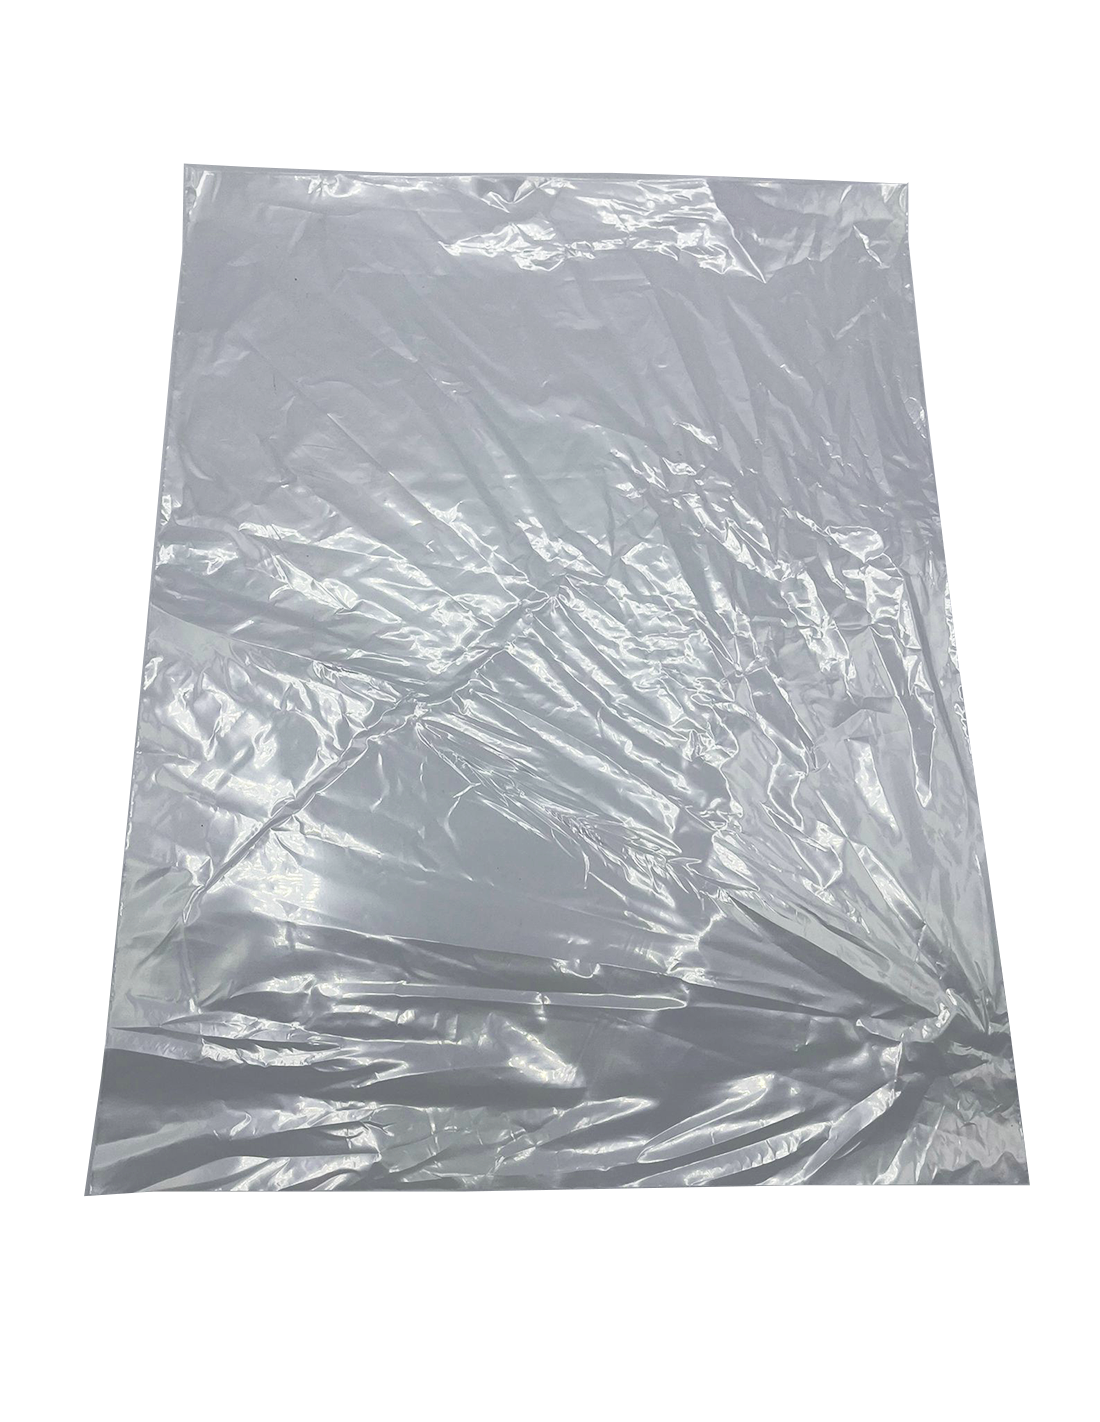 Bolsas con solapa adhesiva 18x25 - Bolsas de plastico transparentes